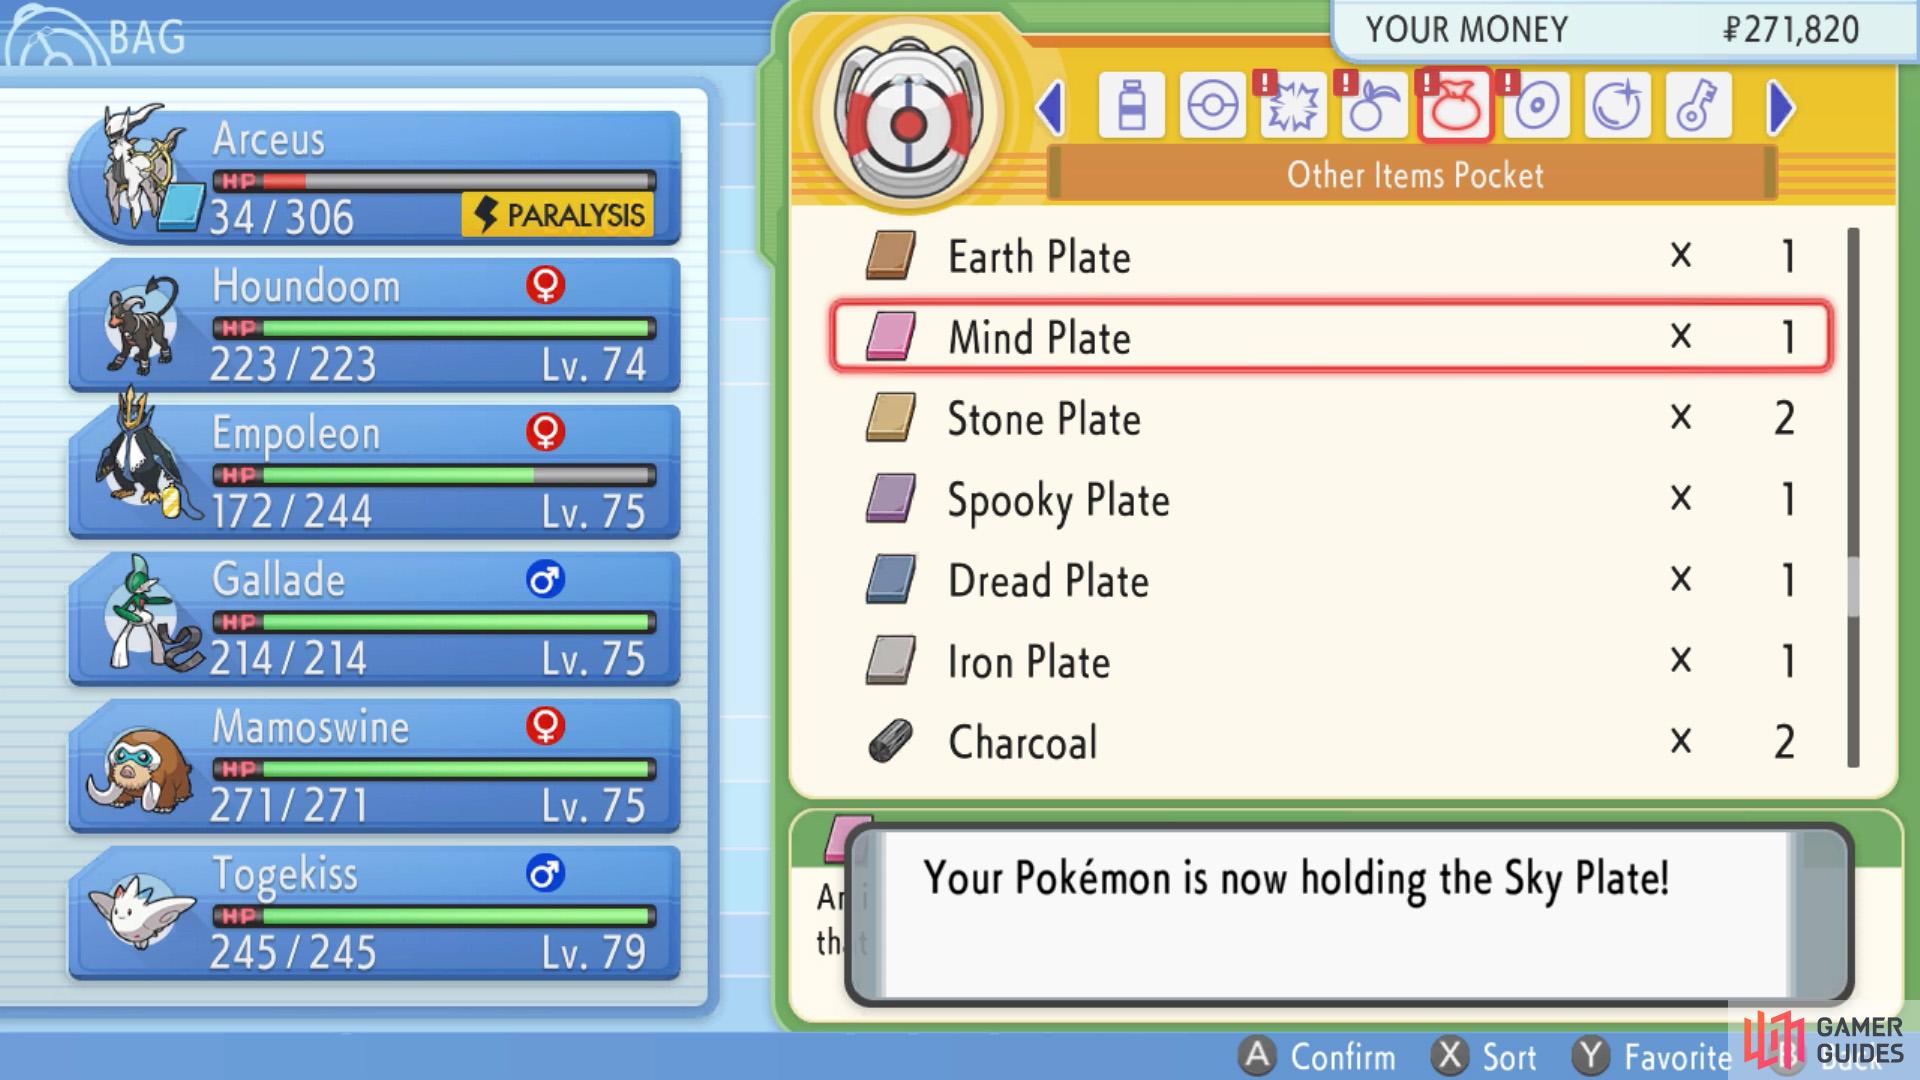 How to Get Rotom and Change its Form - Best/Rare Pokémon - Tips & Tricks, Pokémon: Brilliant Diamond & Shining Pearl